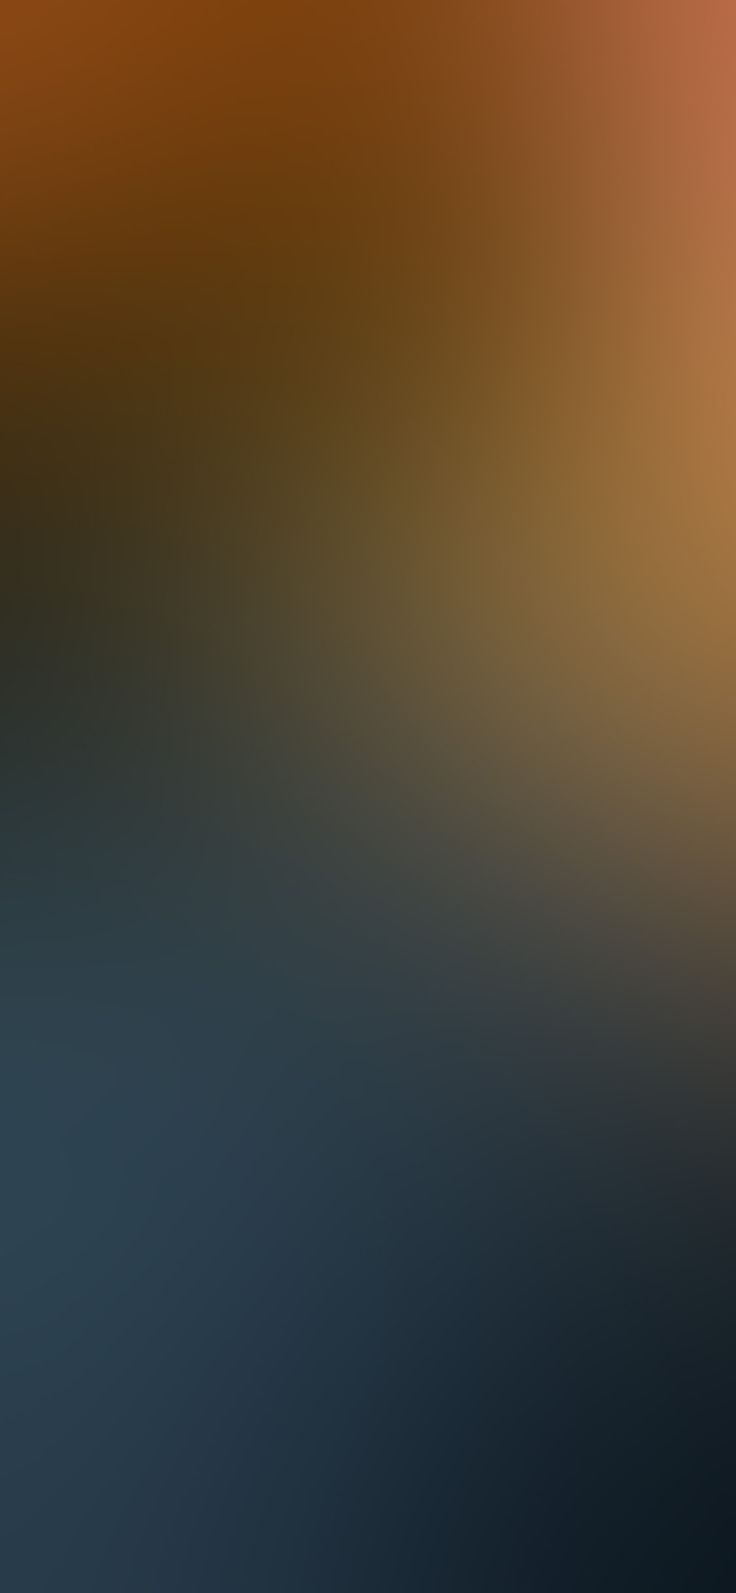 Blur Background Iphone X - 736x1593 Wallpaper 